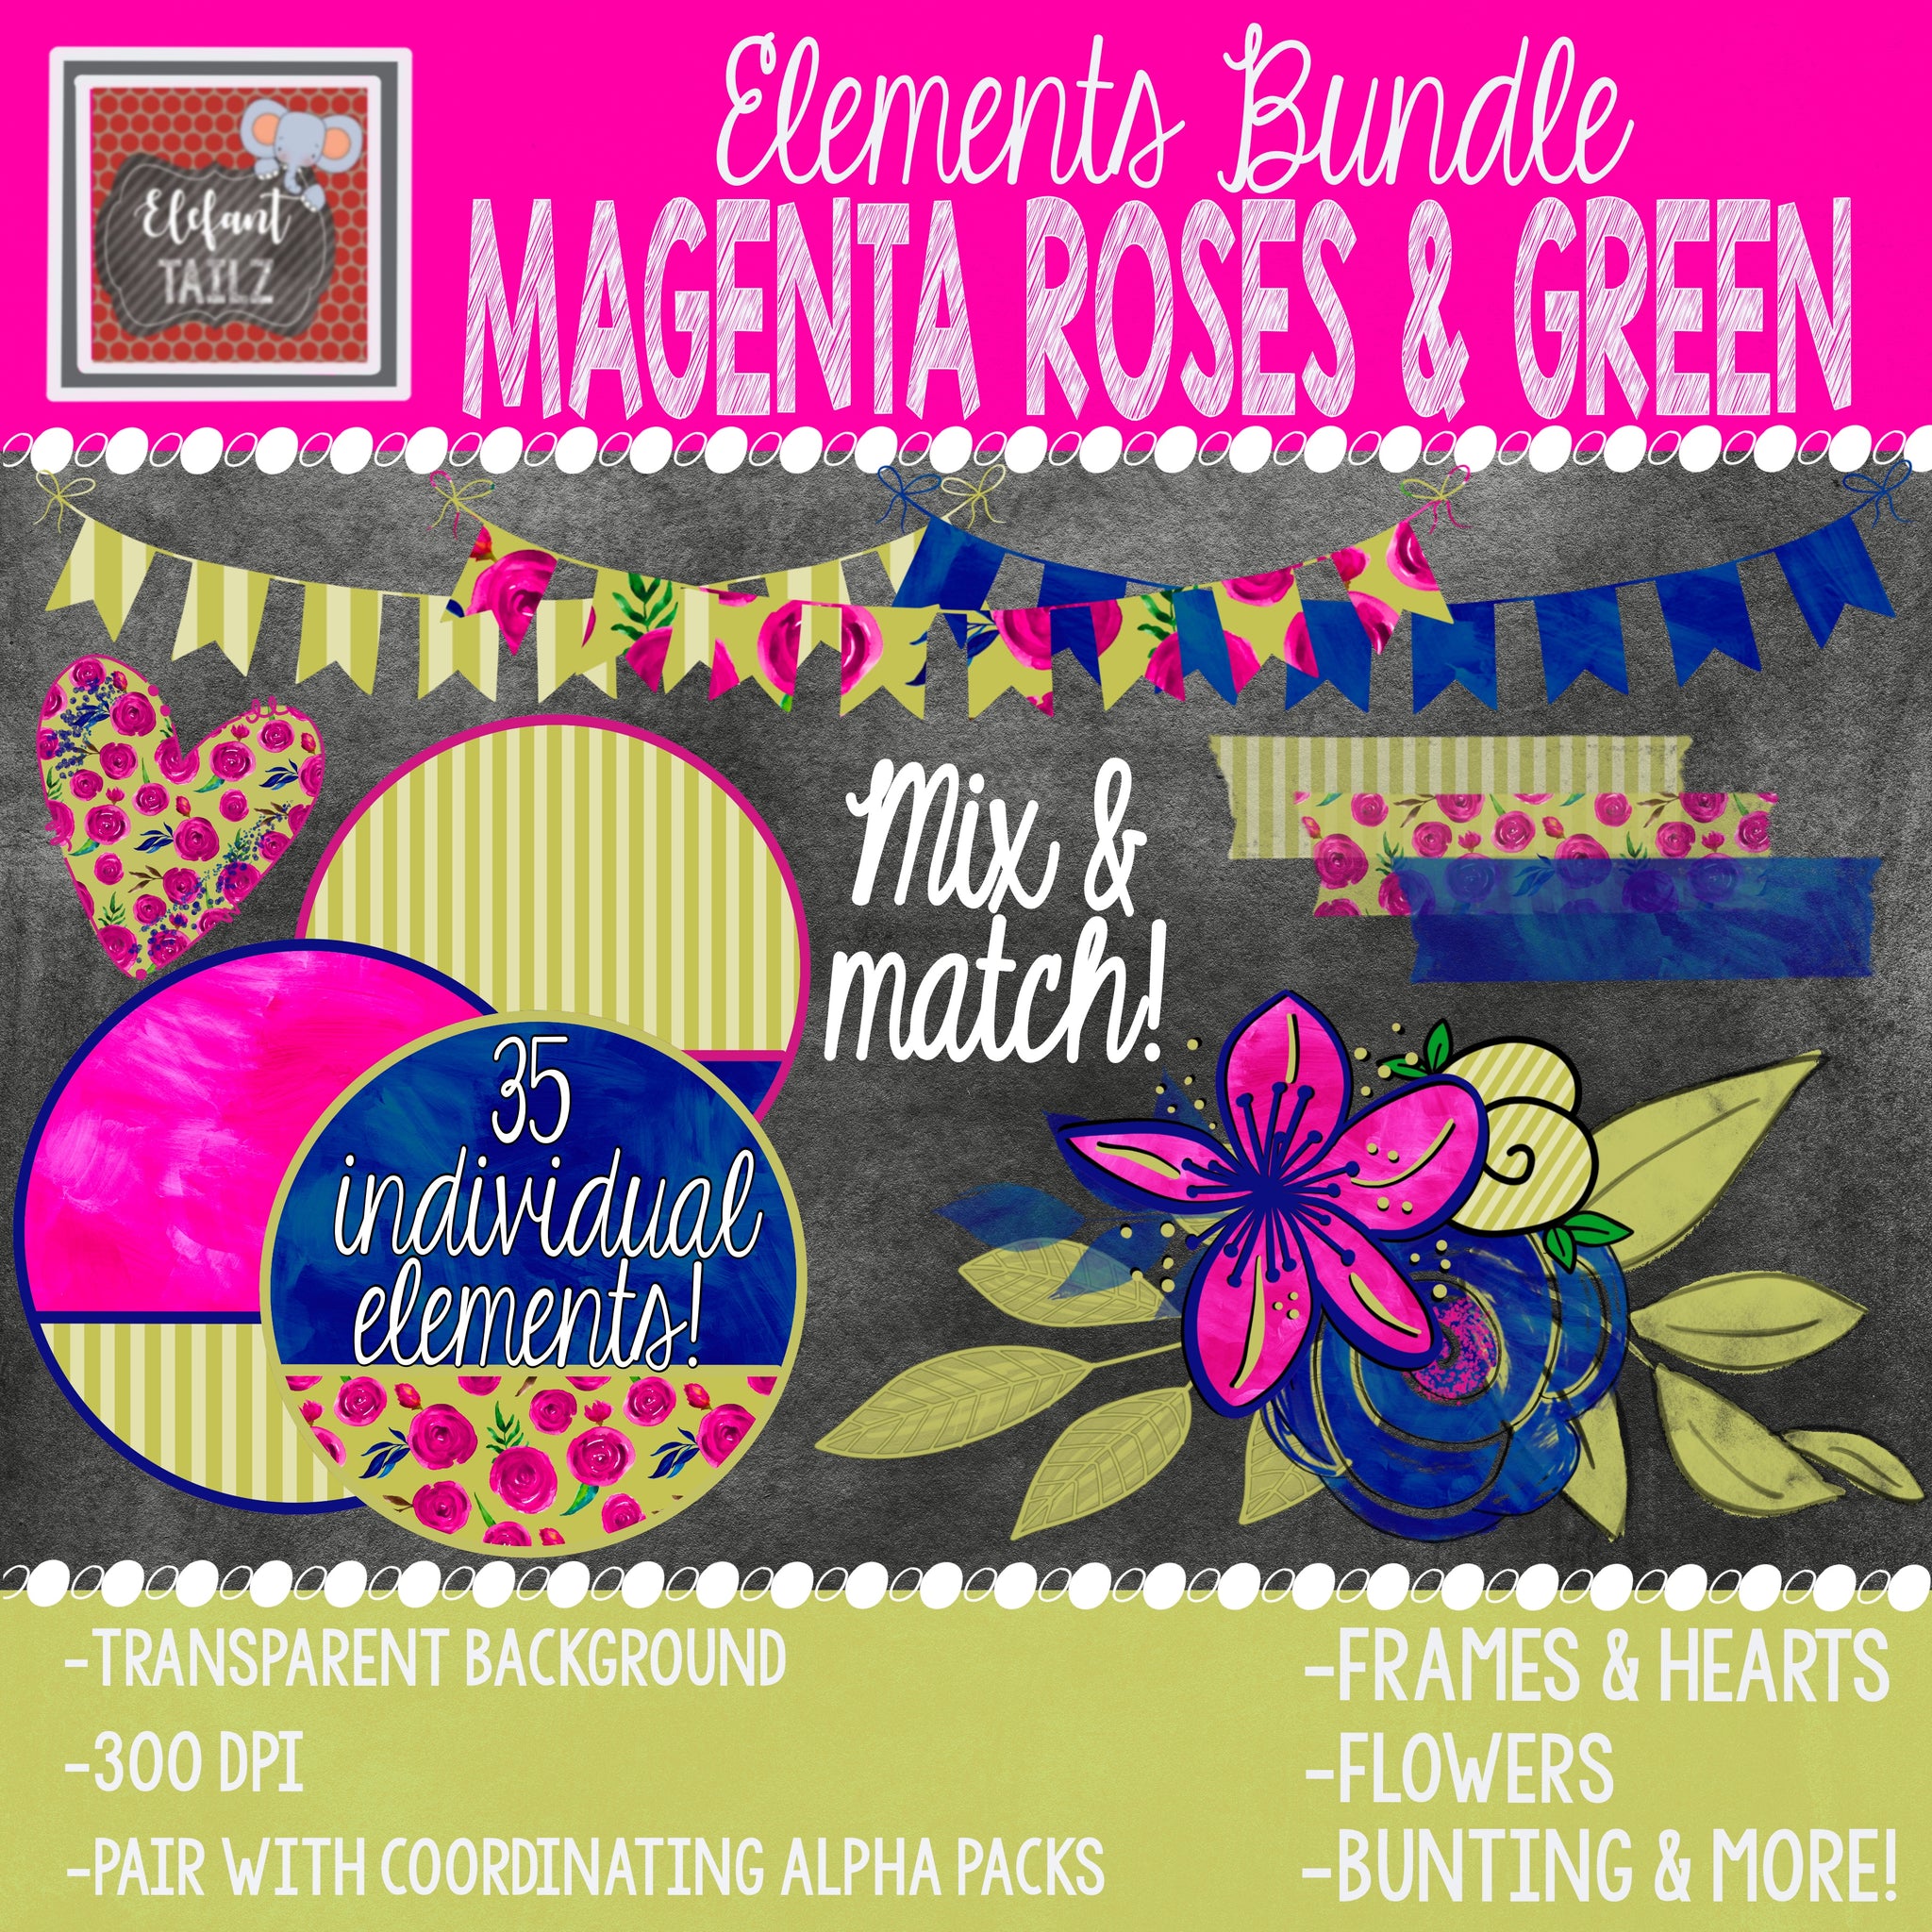 Magenta Roses & Green Elements BUNDLE